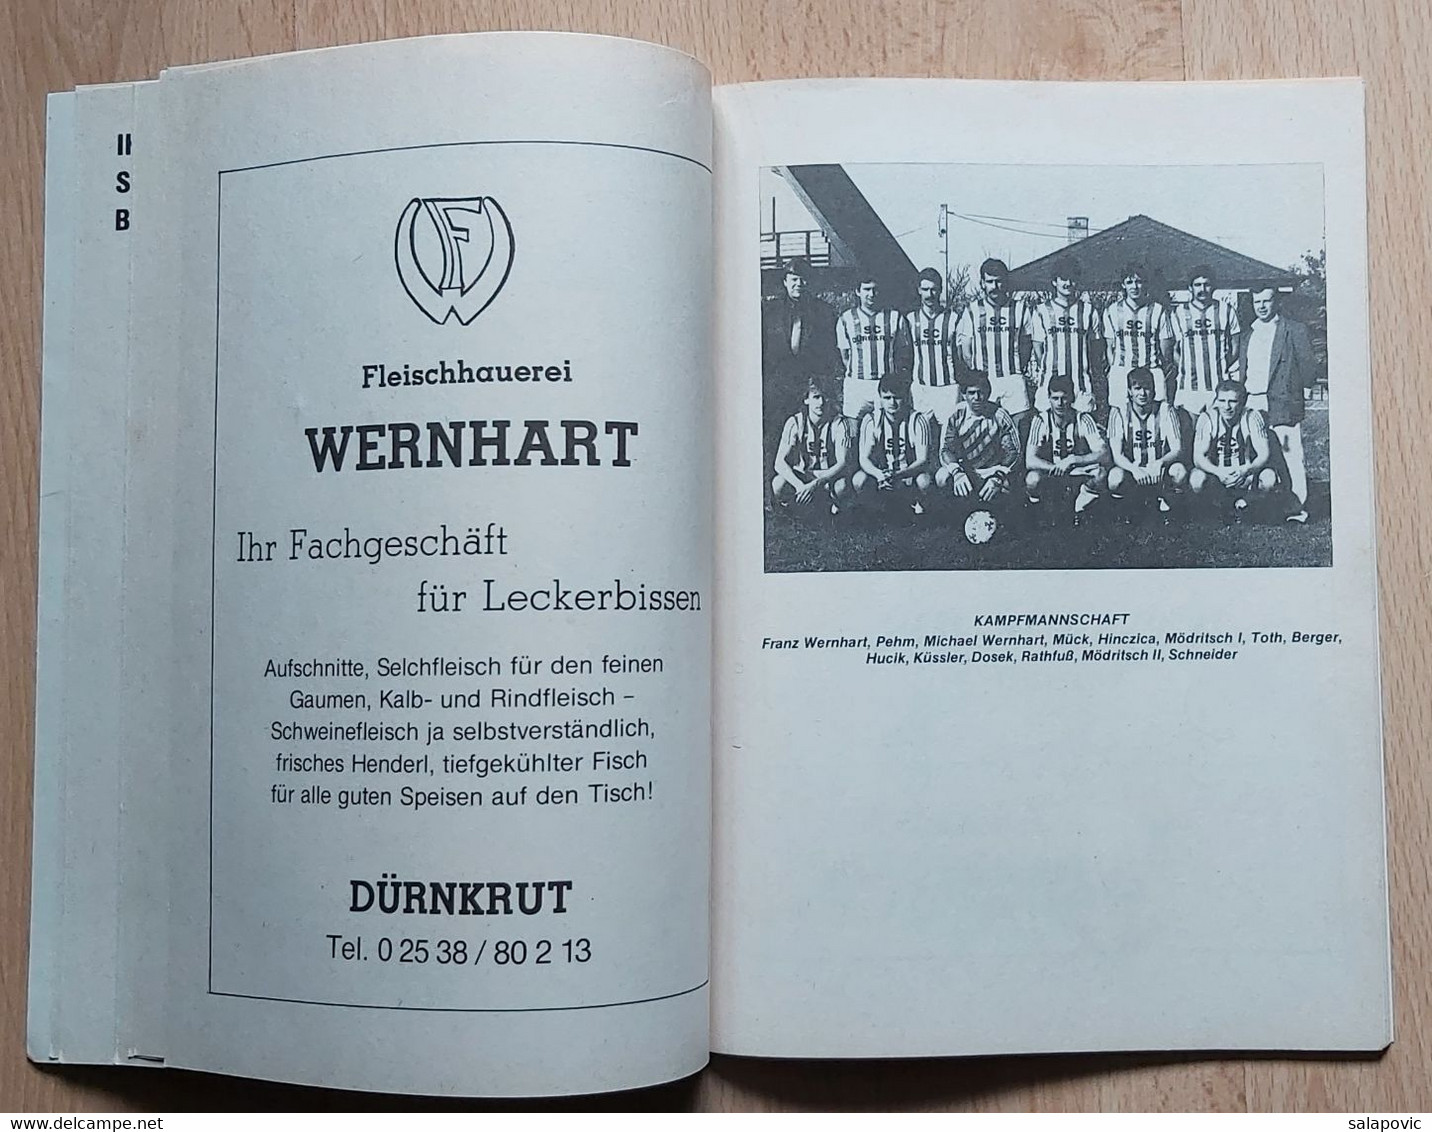 SC Dürnkrut Football Club Austria 70 Jahre Sportclub Festliche Tage 1. - 4. Juni 1990 - Books